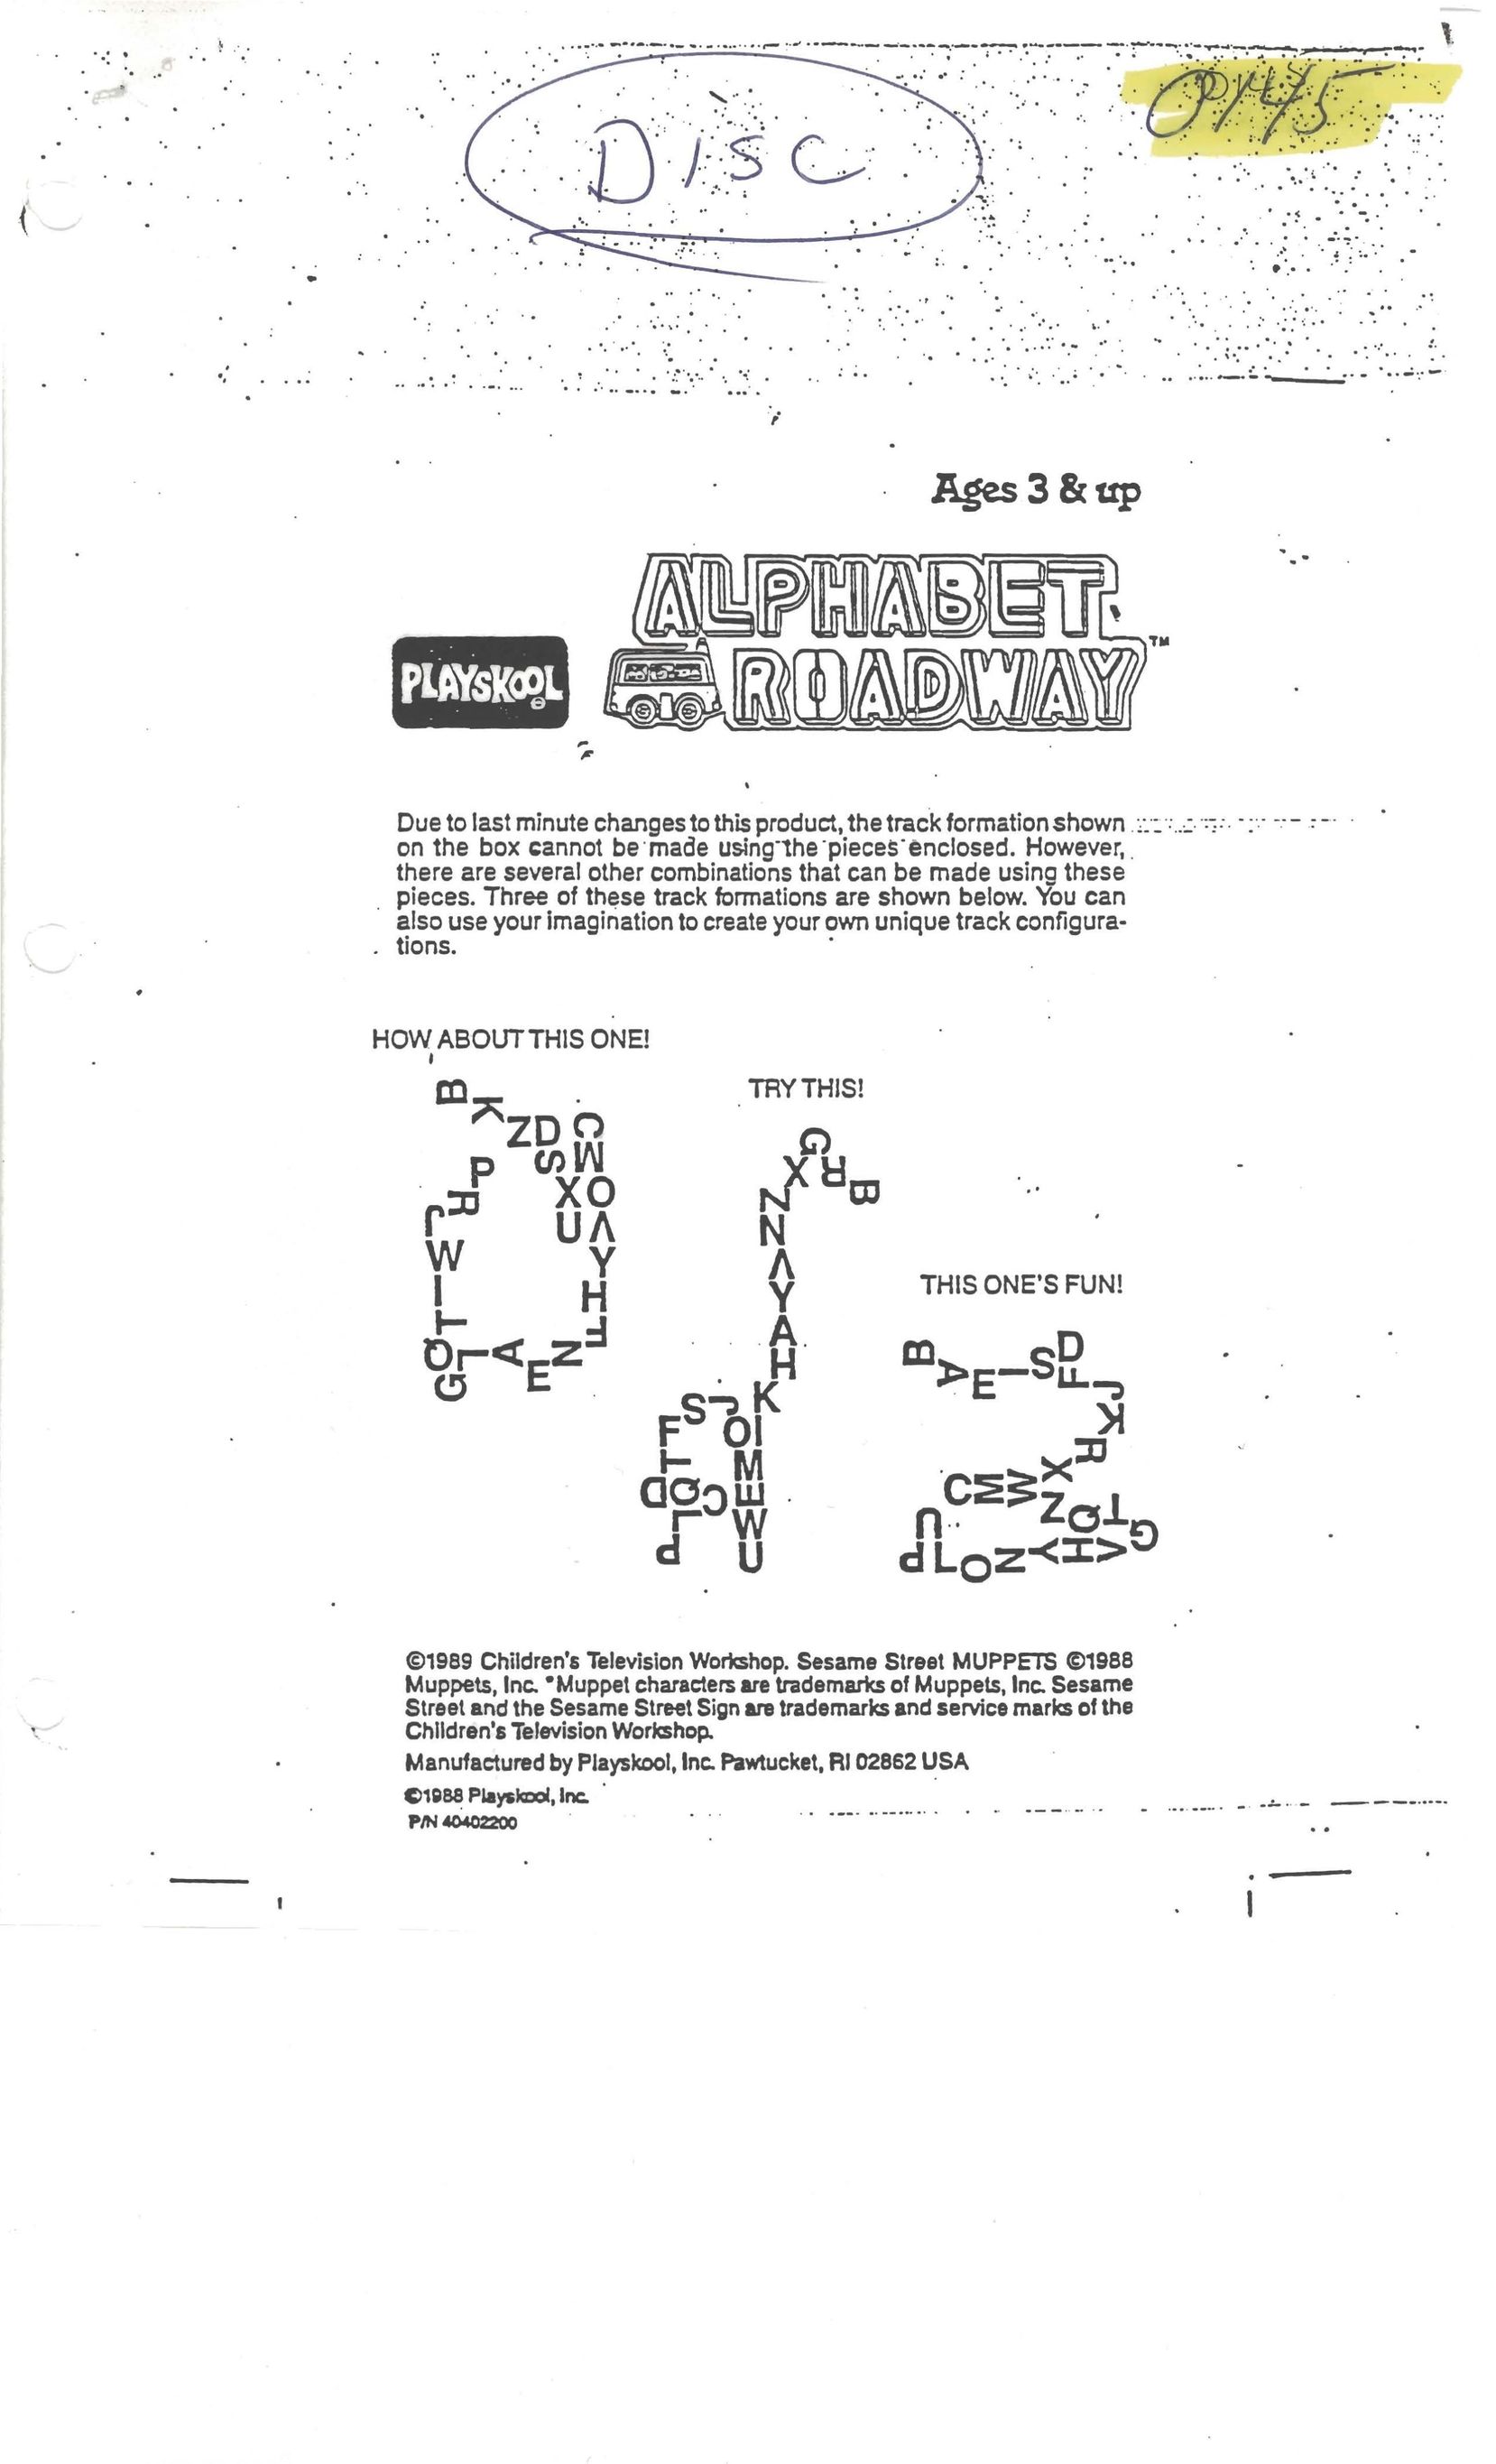 Playskool Alphabet Roadway Games User Manual